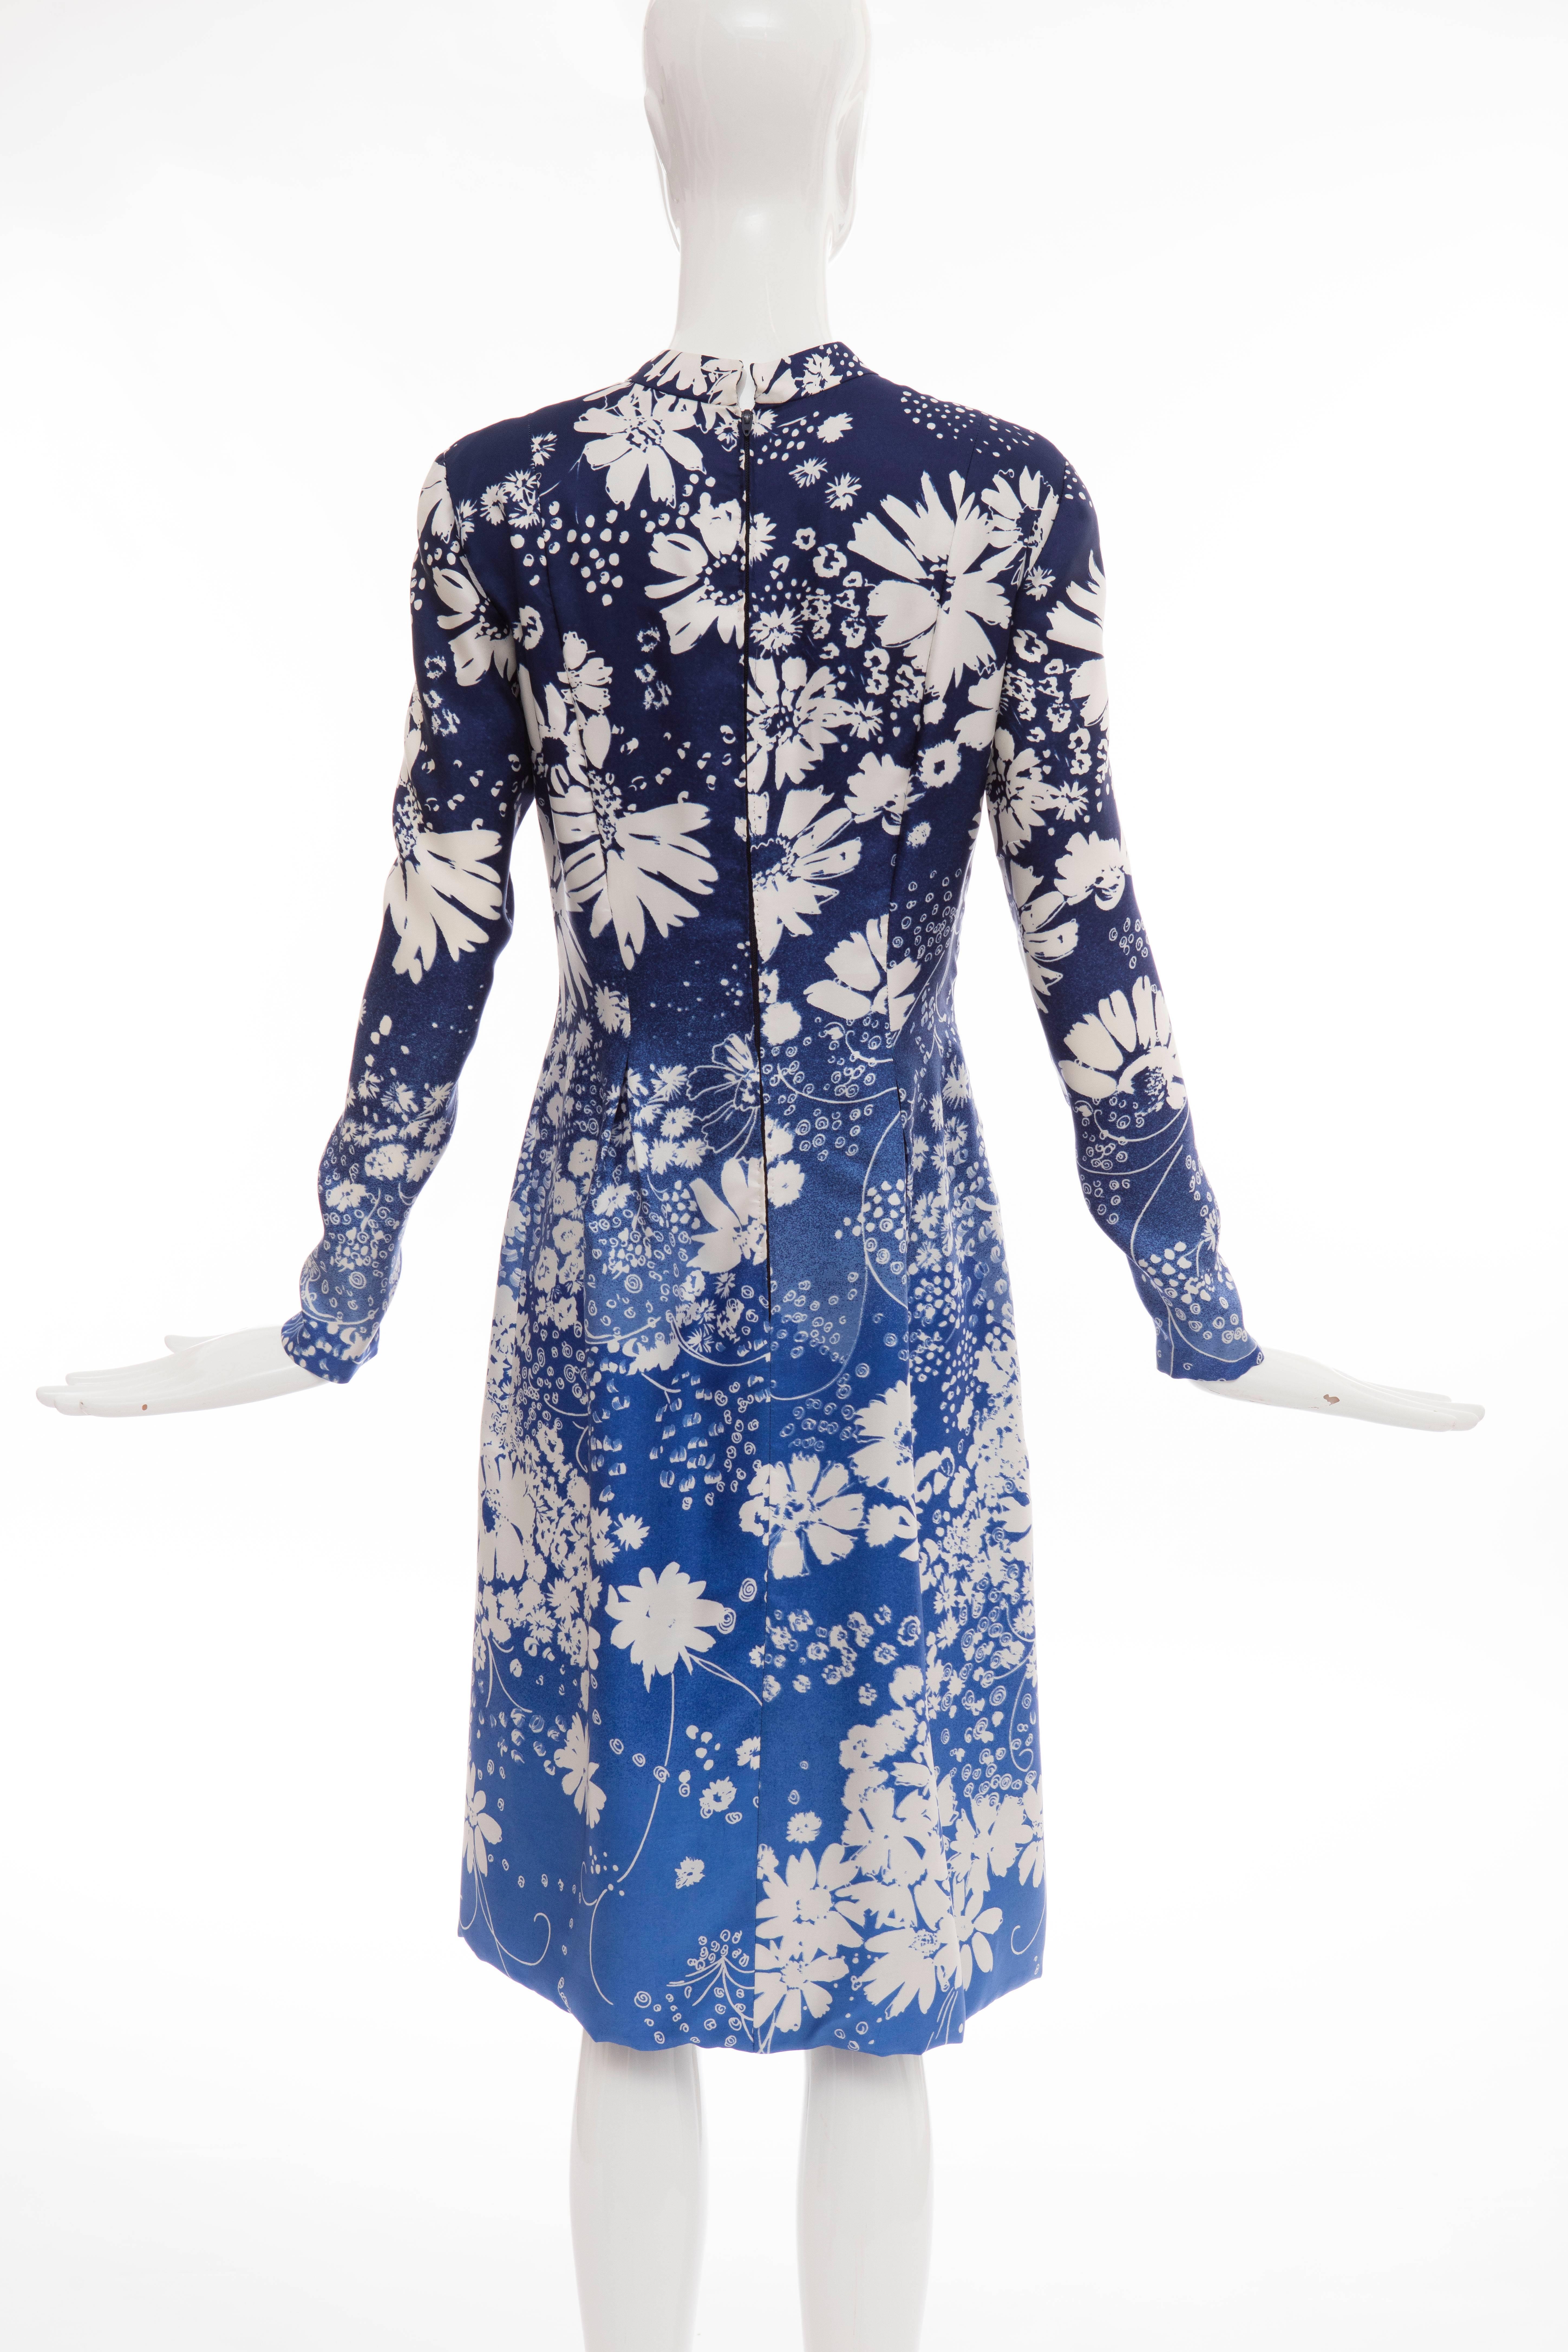 Women's Pauline Trigere Navy Blue Ombre Silk Floral Long Sleeve Dress, Circa 1980's